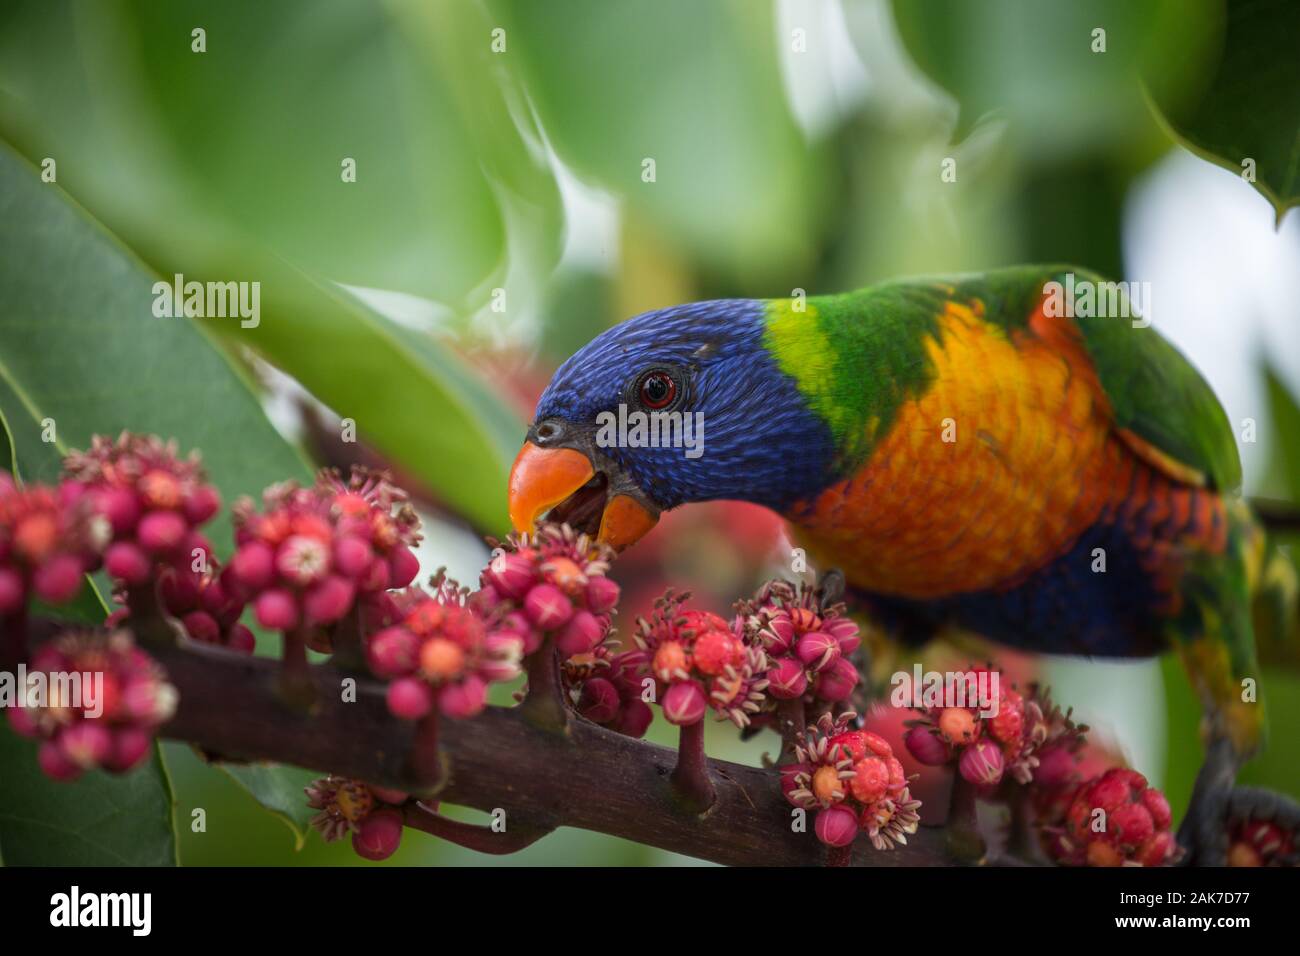 A close up of a colourful Rainbow Lorikeet bird feeding on pink flowers in Australia Stock Photo